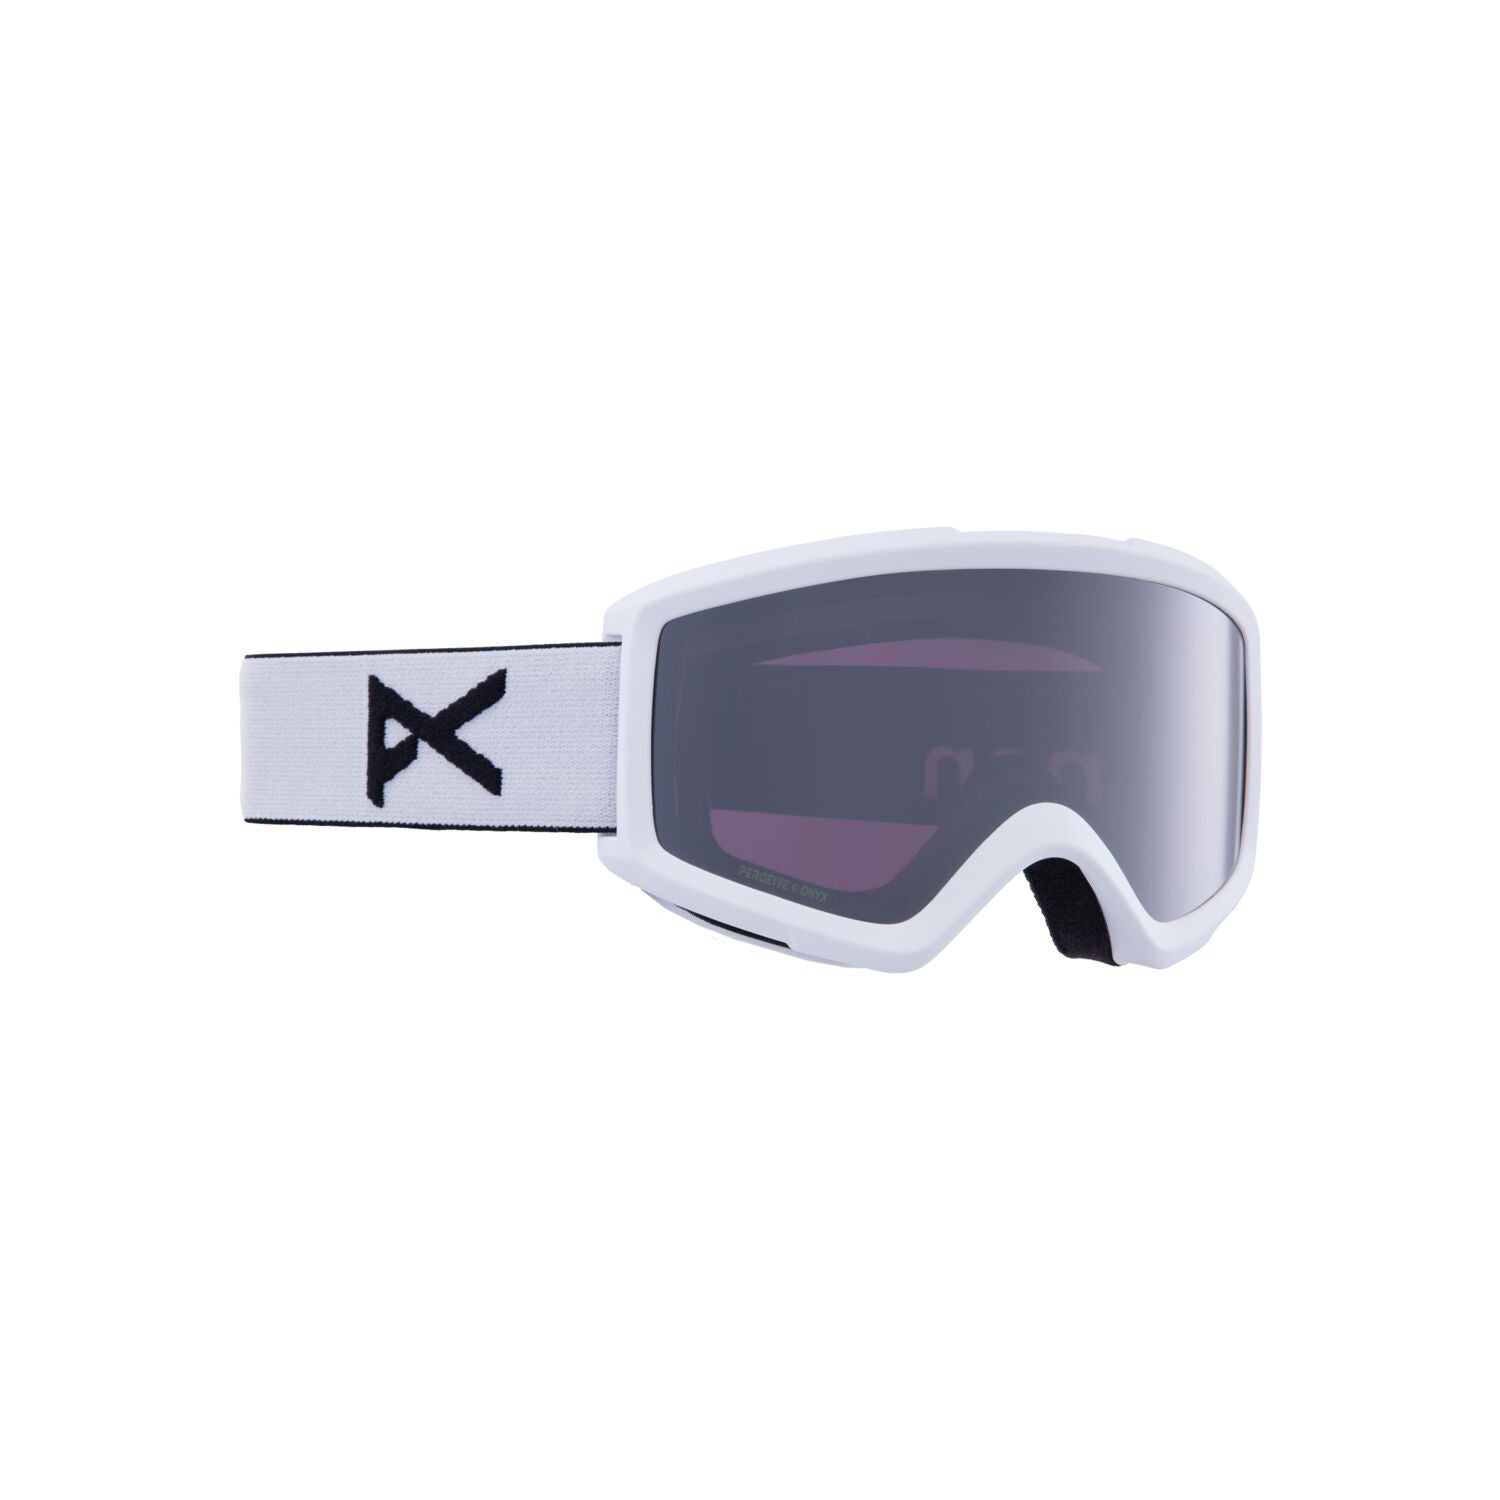 Helix 2.0 Goggles + Bonus Lens - White